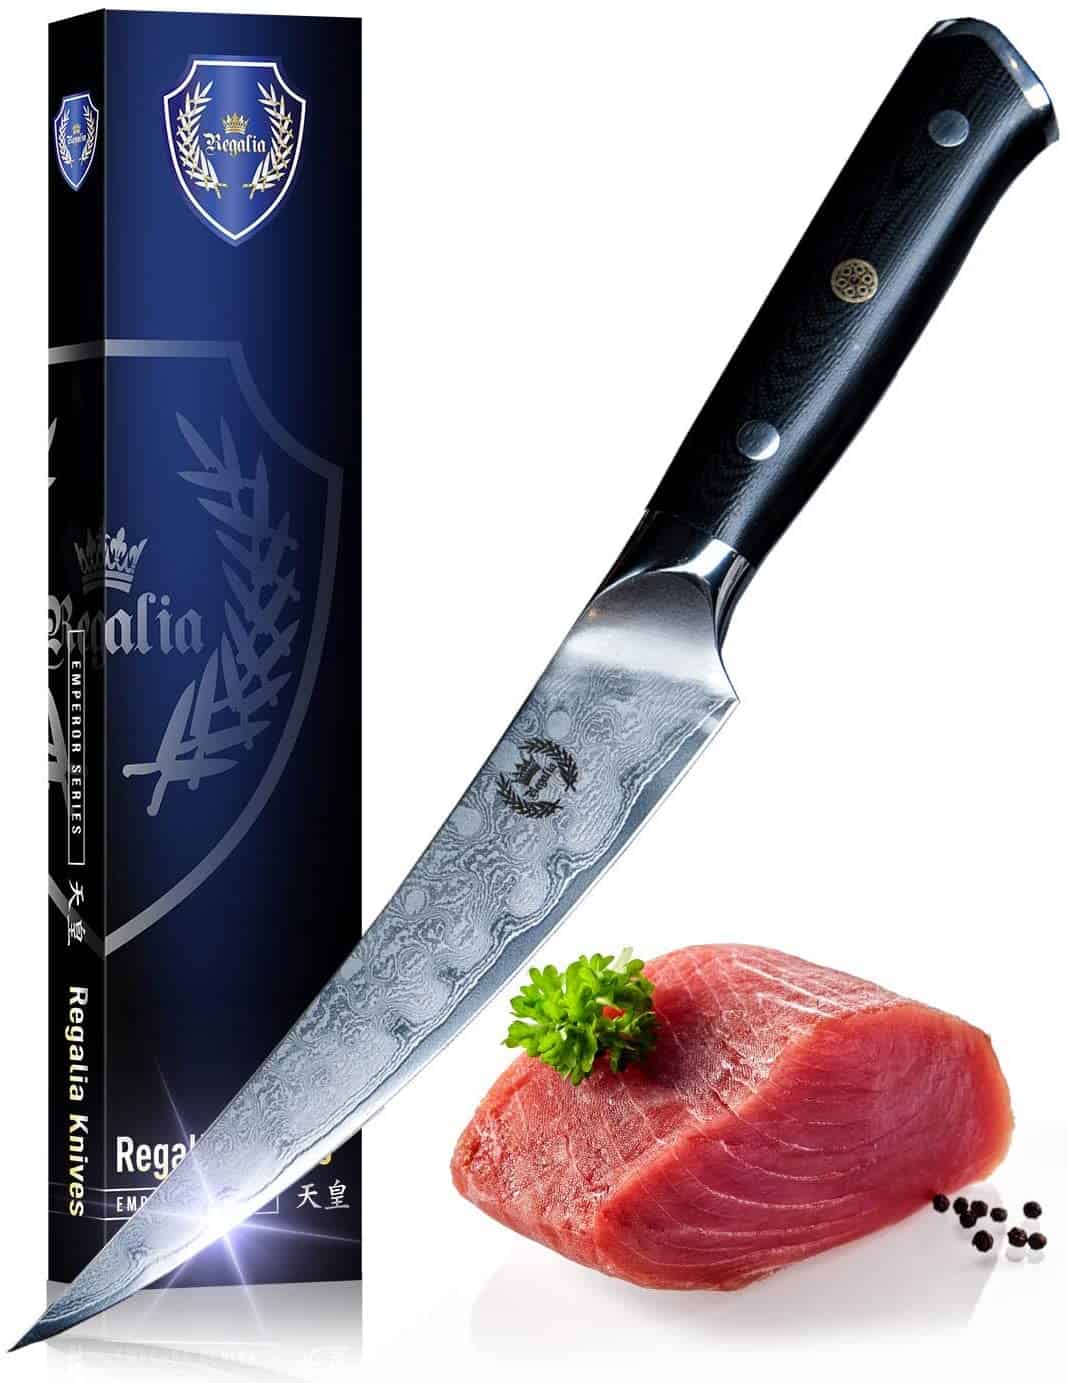 El mejor cuchillo para deshuesar de acero japonés AUS 10- Regalia Boning: cuchillo para filetear